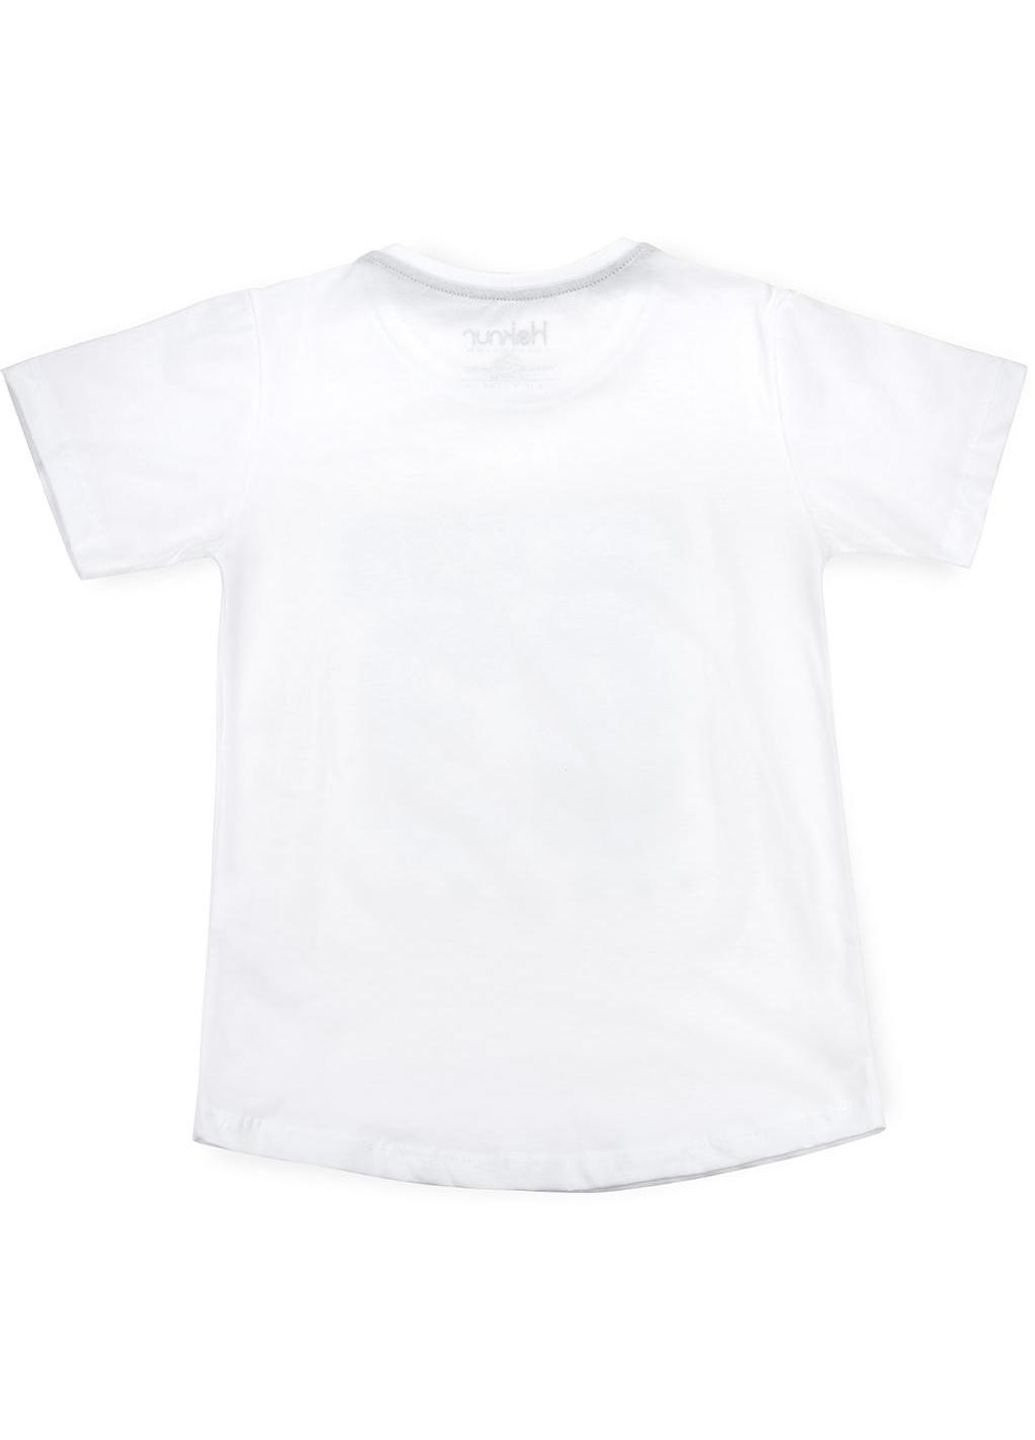 Белая демисезонная футболка детская "cool & free" (6547-140b-white) Haknur